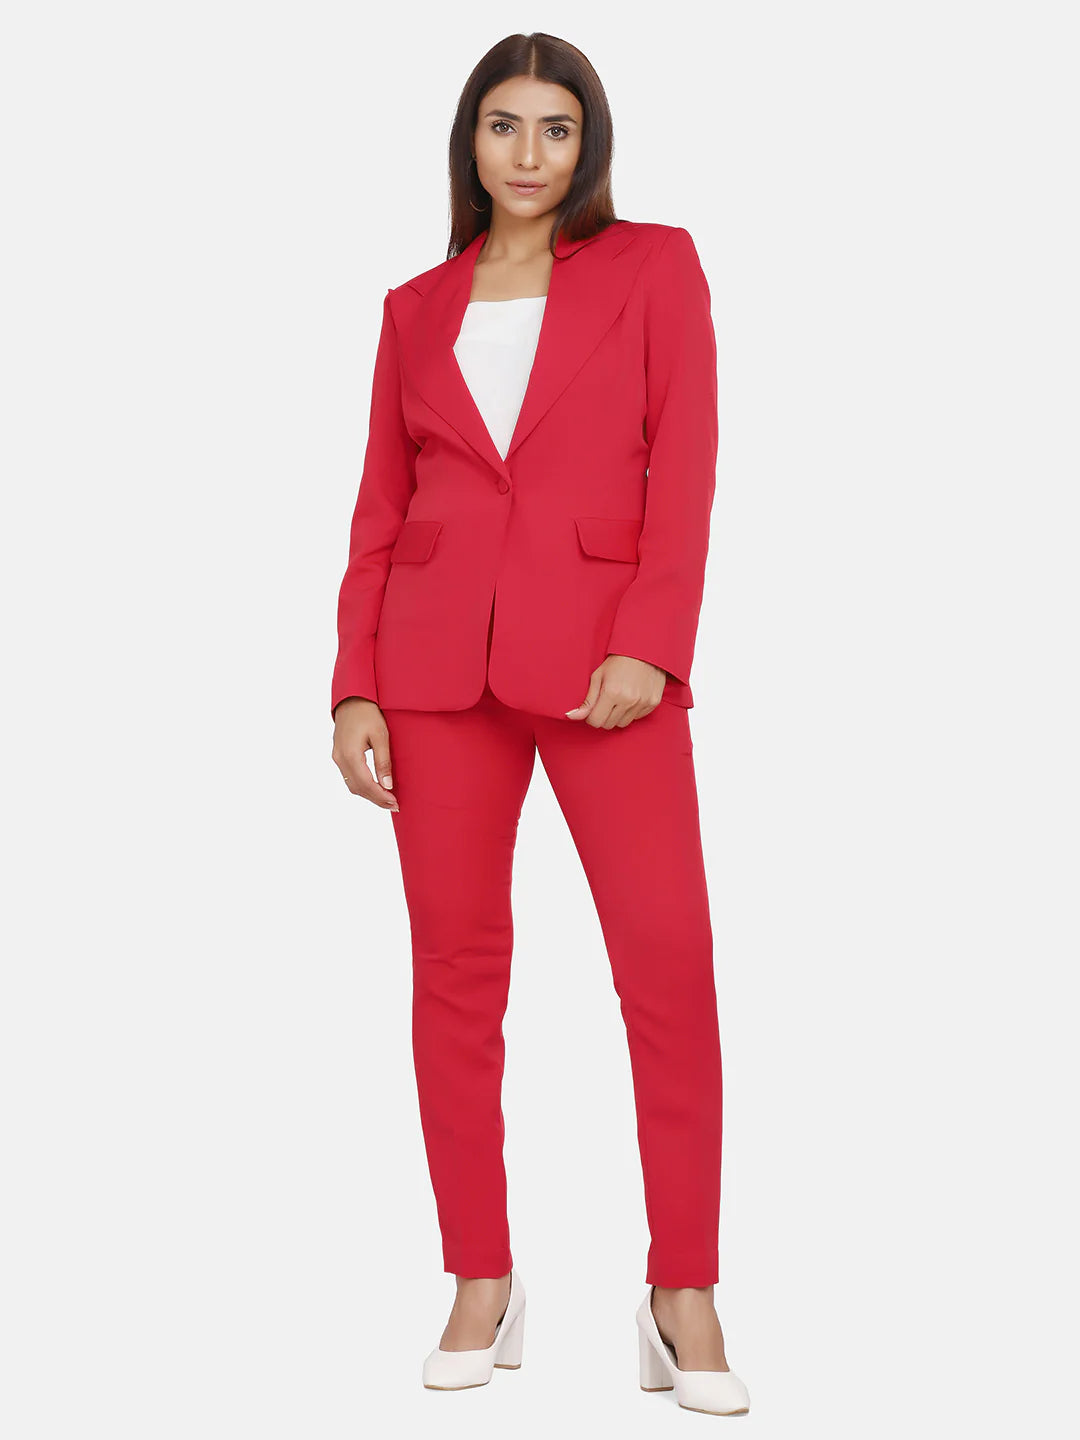 Red pant suit  Woman suit fashion Fashion Suits for women